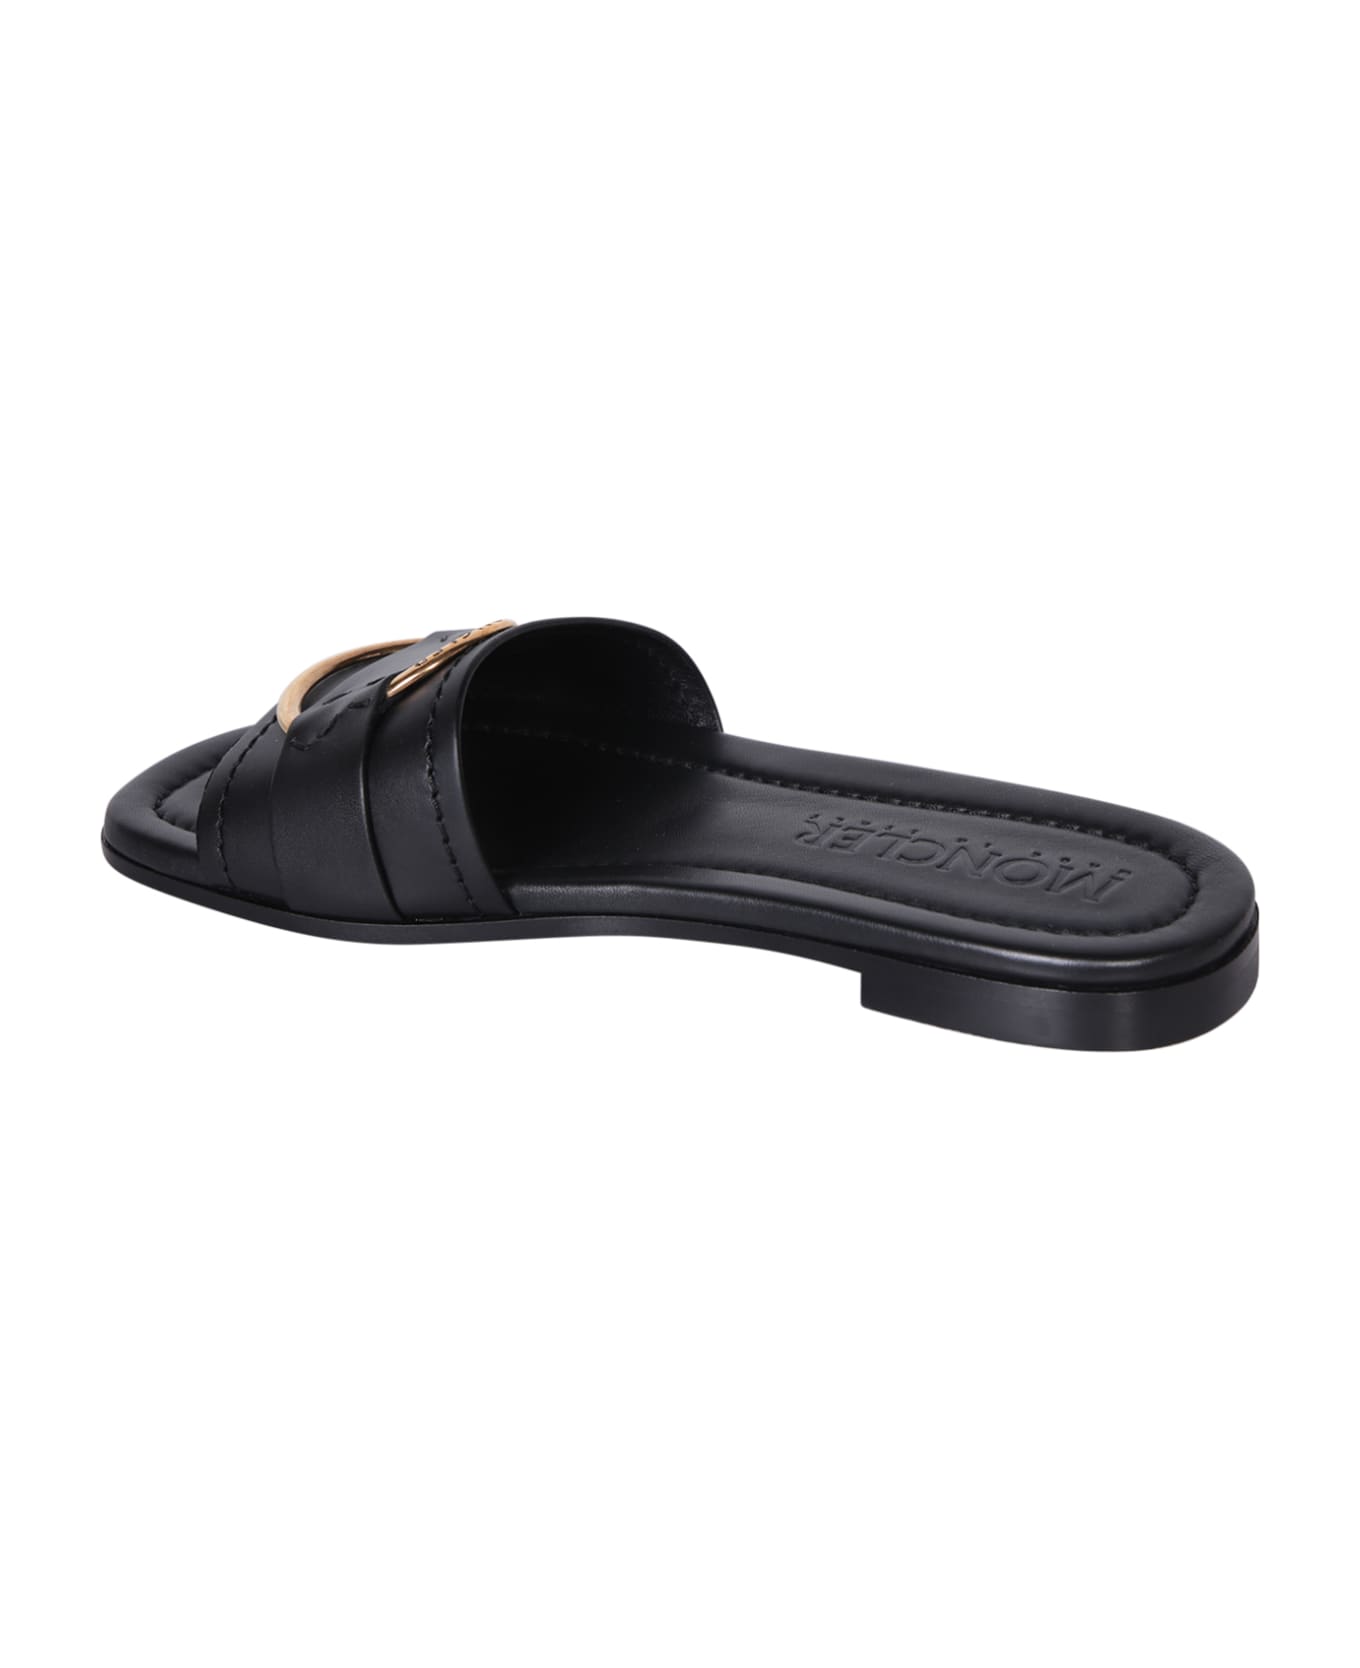 Moncler Bell Leather Slides - Nero サンダル